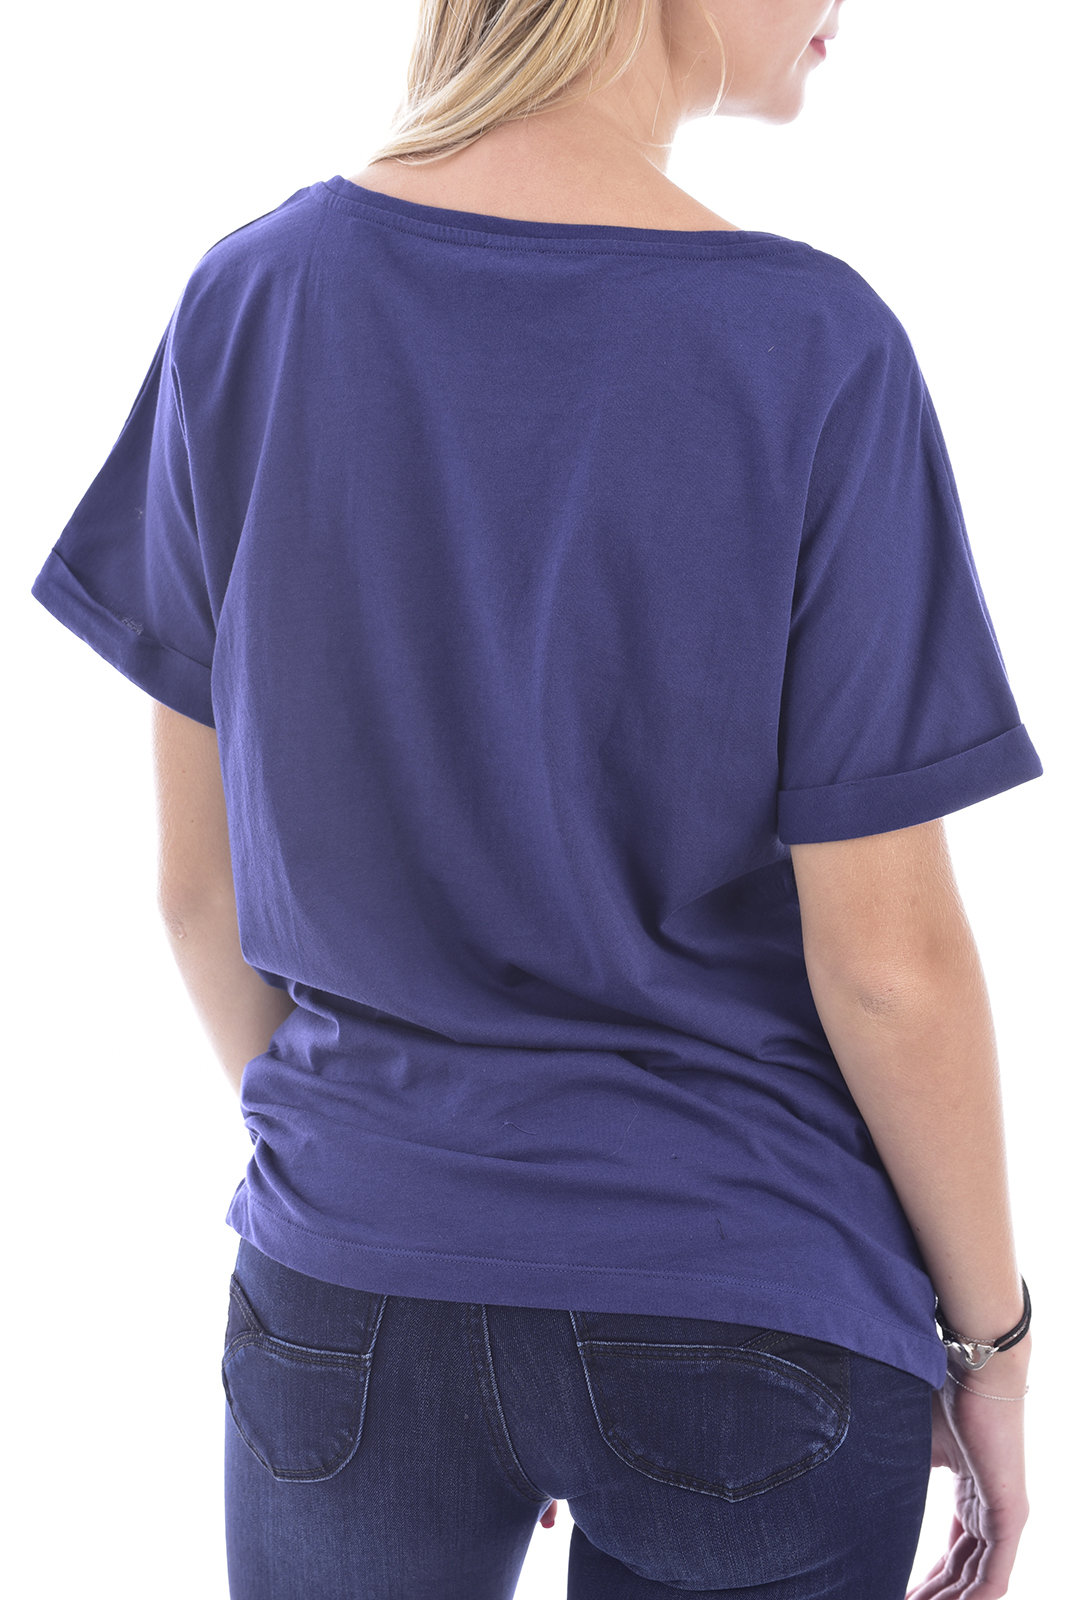 Emporio Armani Tee-shirt Bleu À Manches Courtes 164340 0p291 